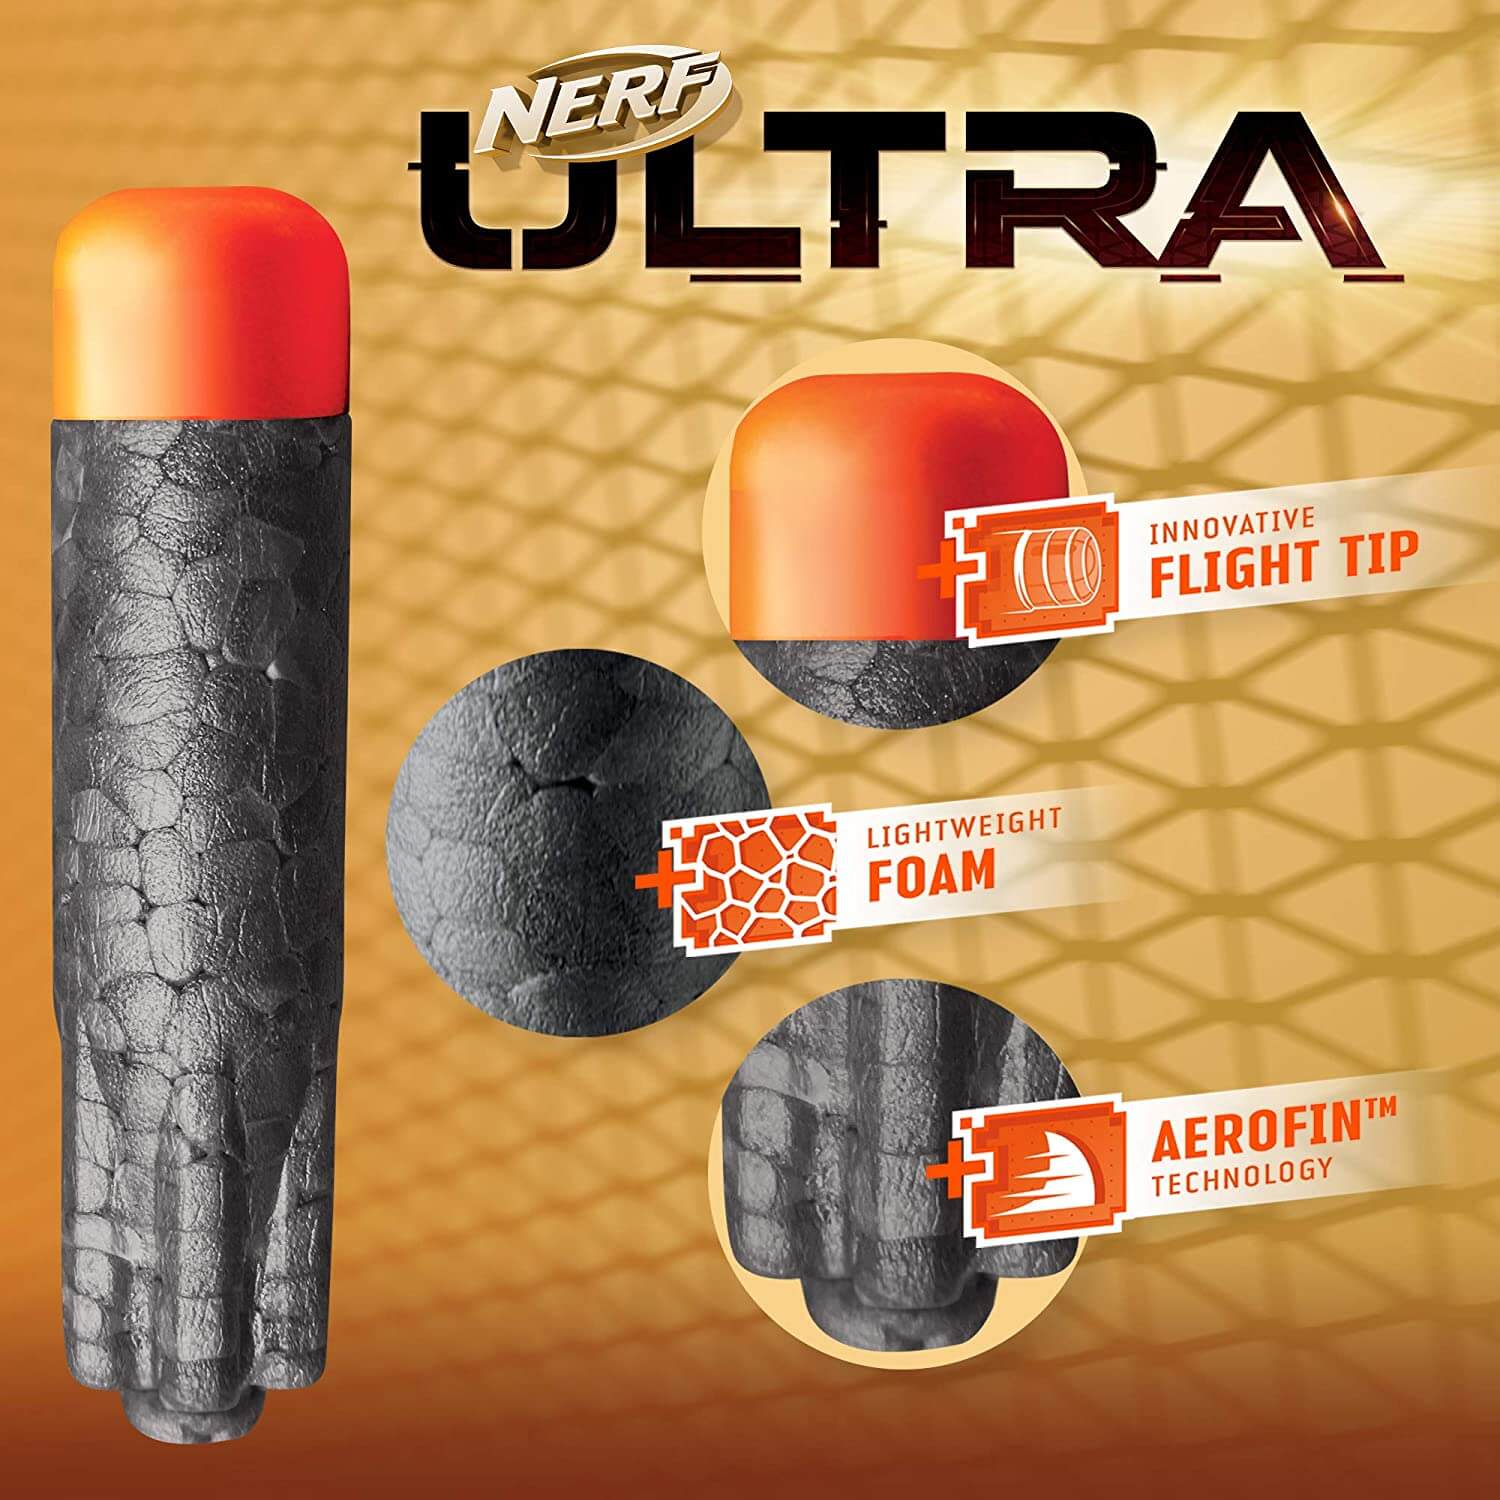 Blaster motorisé Nerf Ultra One